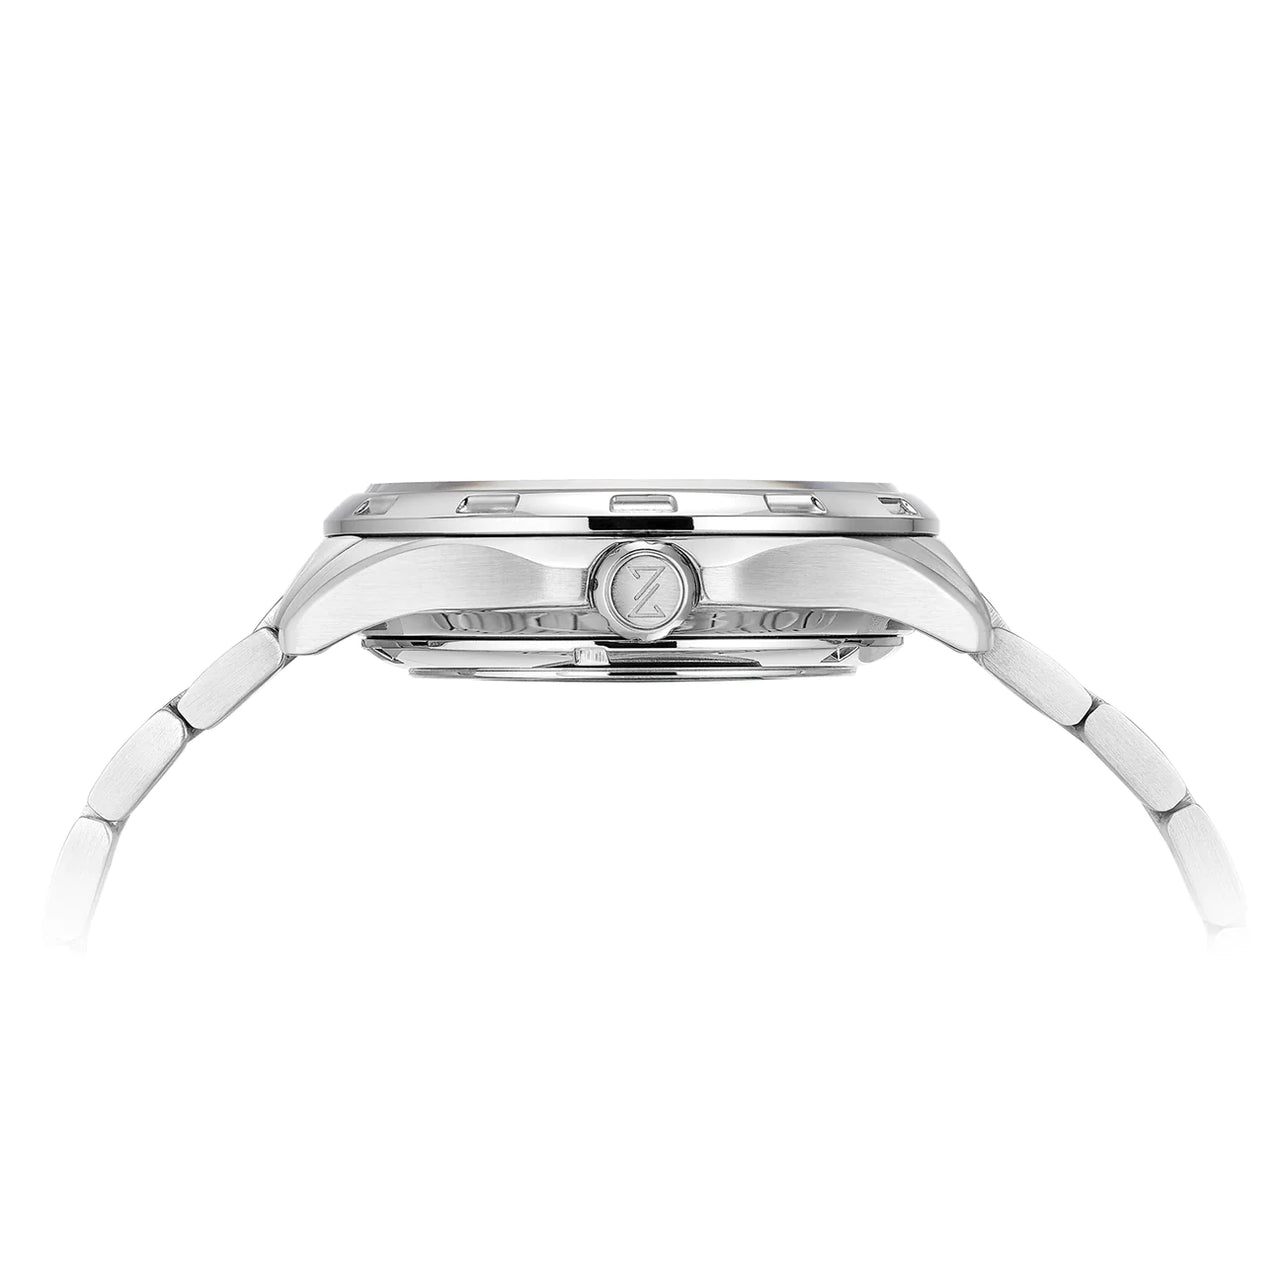 Zorbello Mechanical Watch M1 Series Tiffany Blue LumiNova® ZBAE003